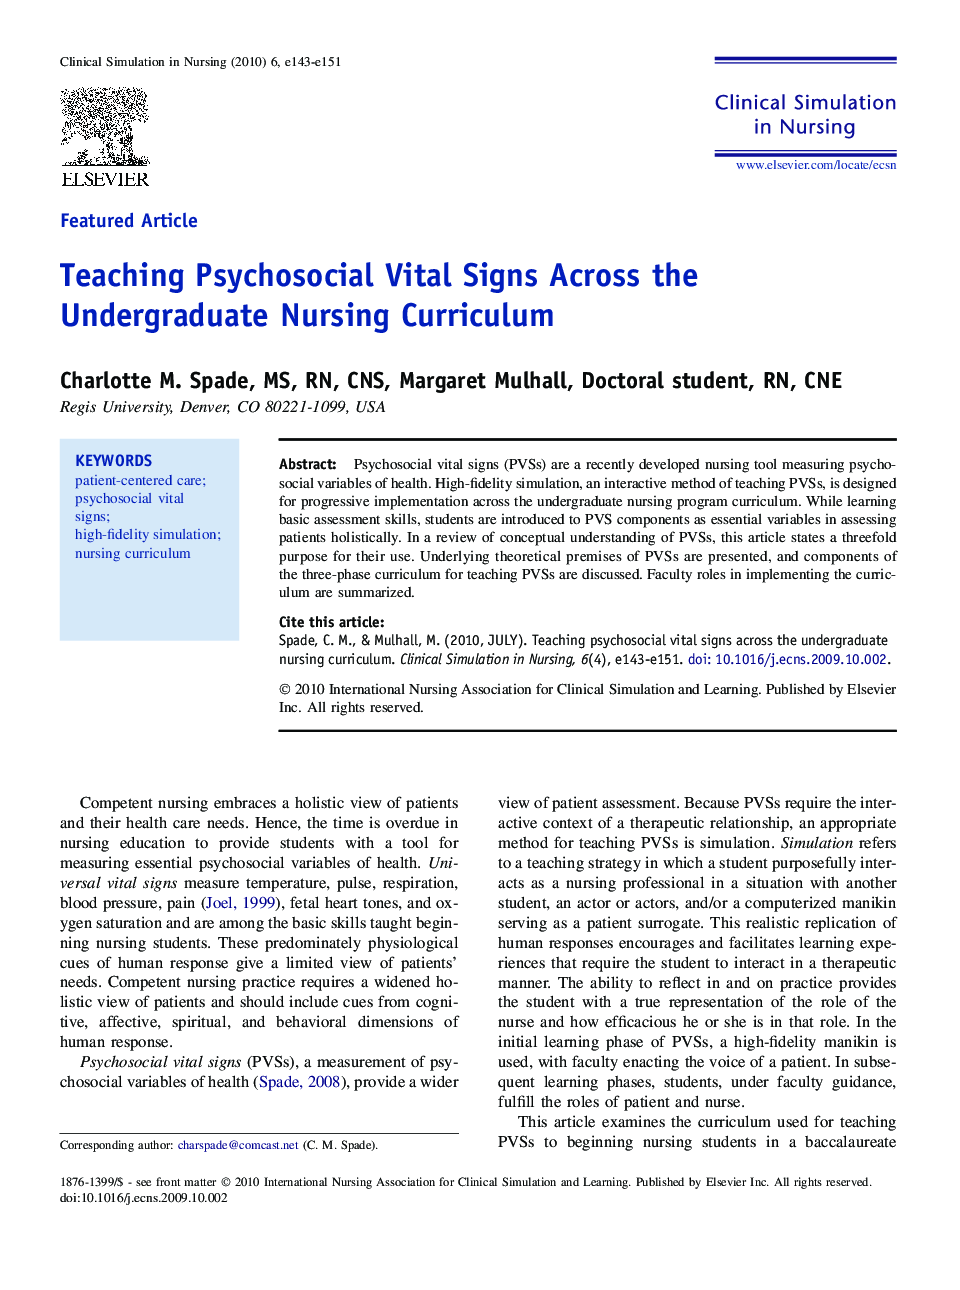 Teaching Psychosocial Vital Signs Across the Undergraduate Nursing Curriculum 